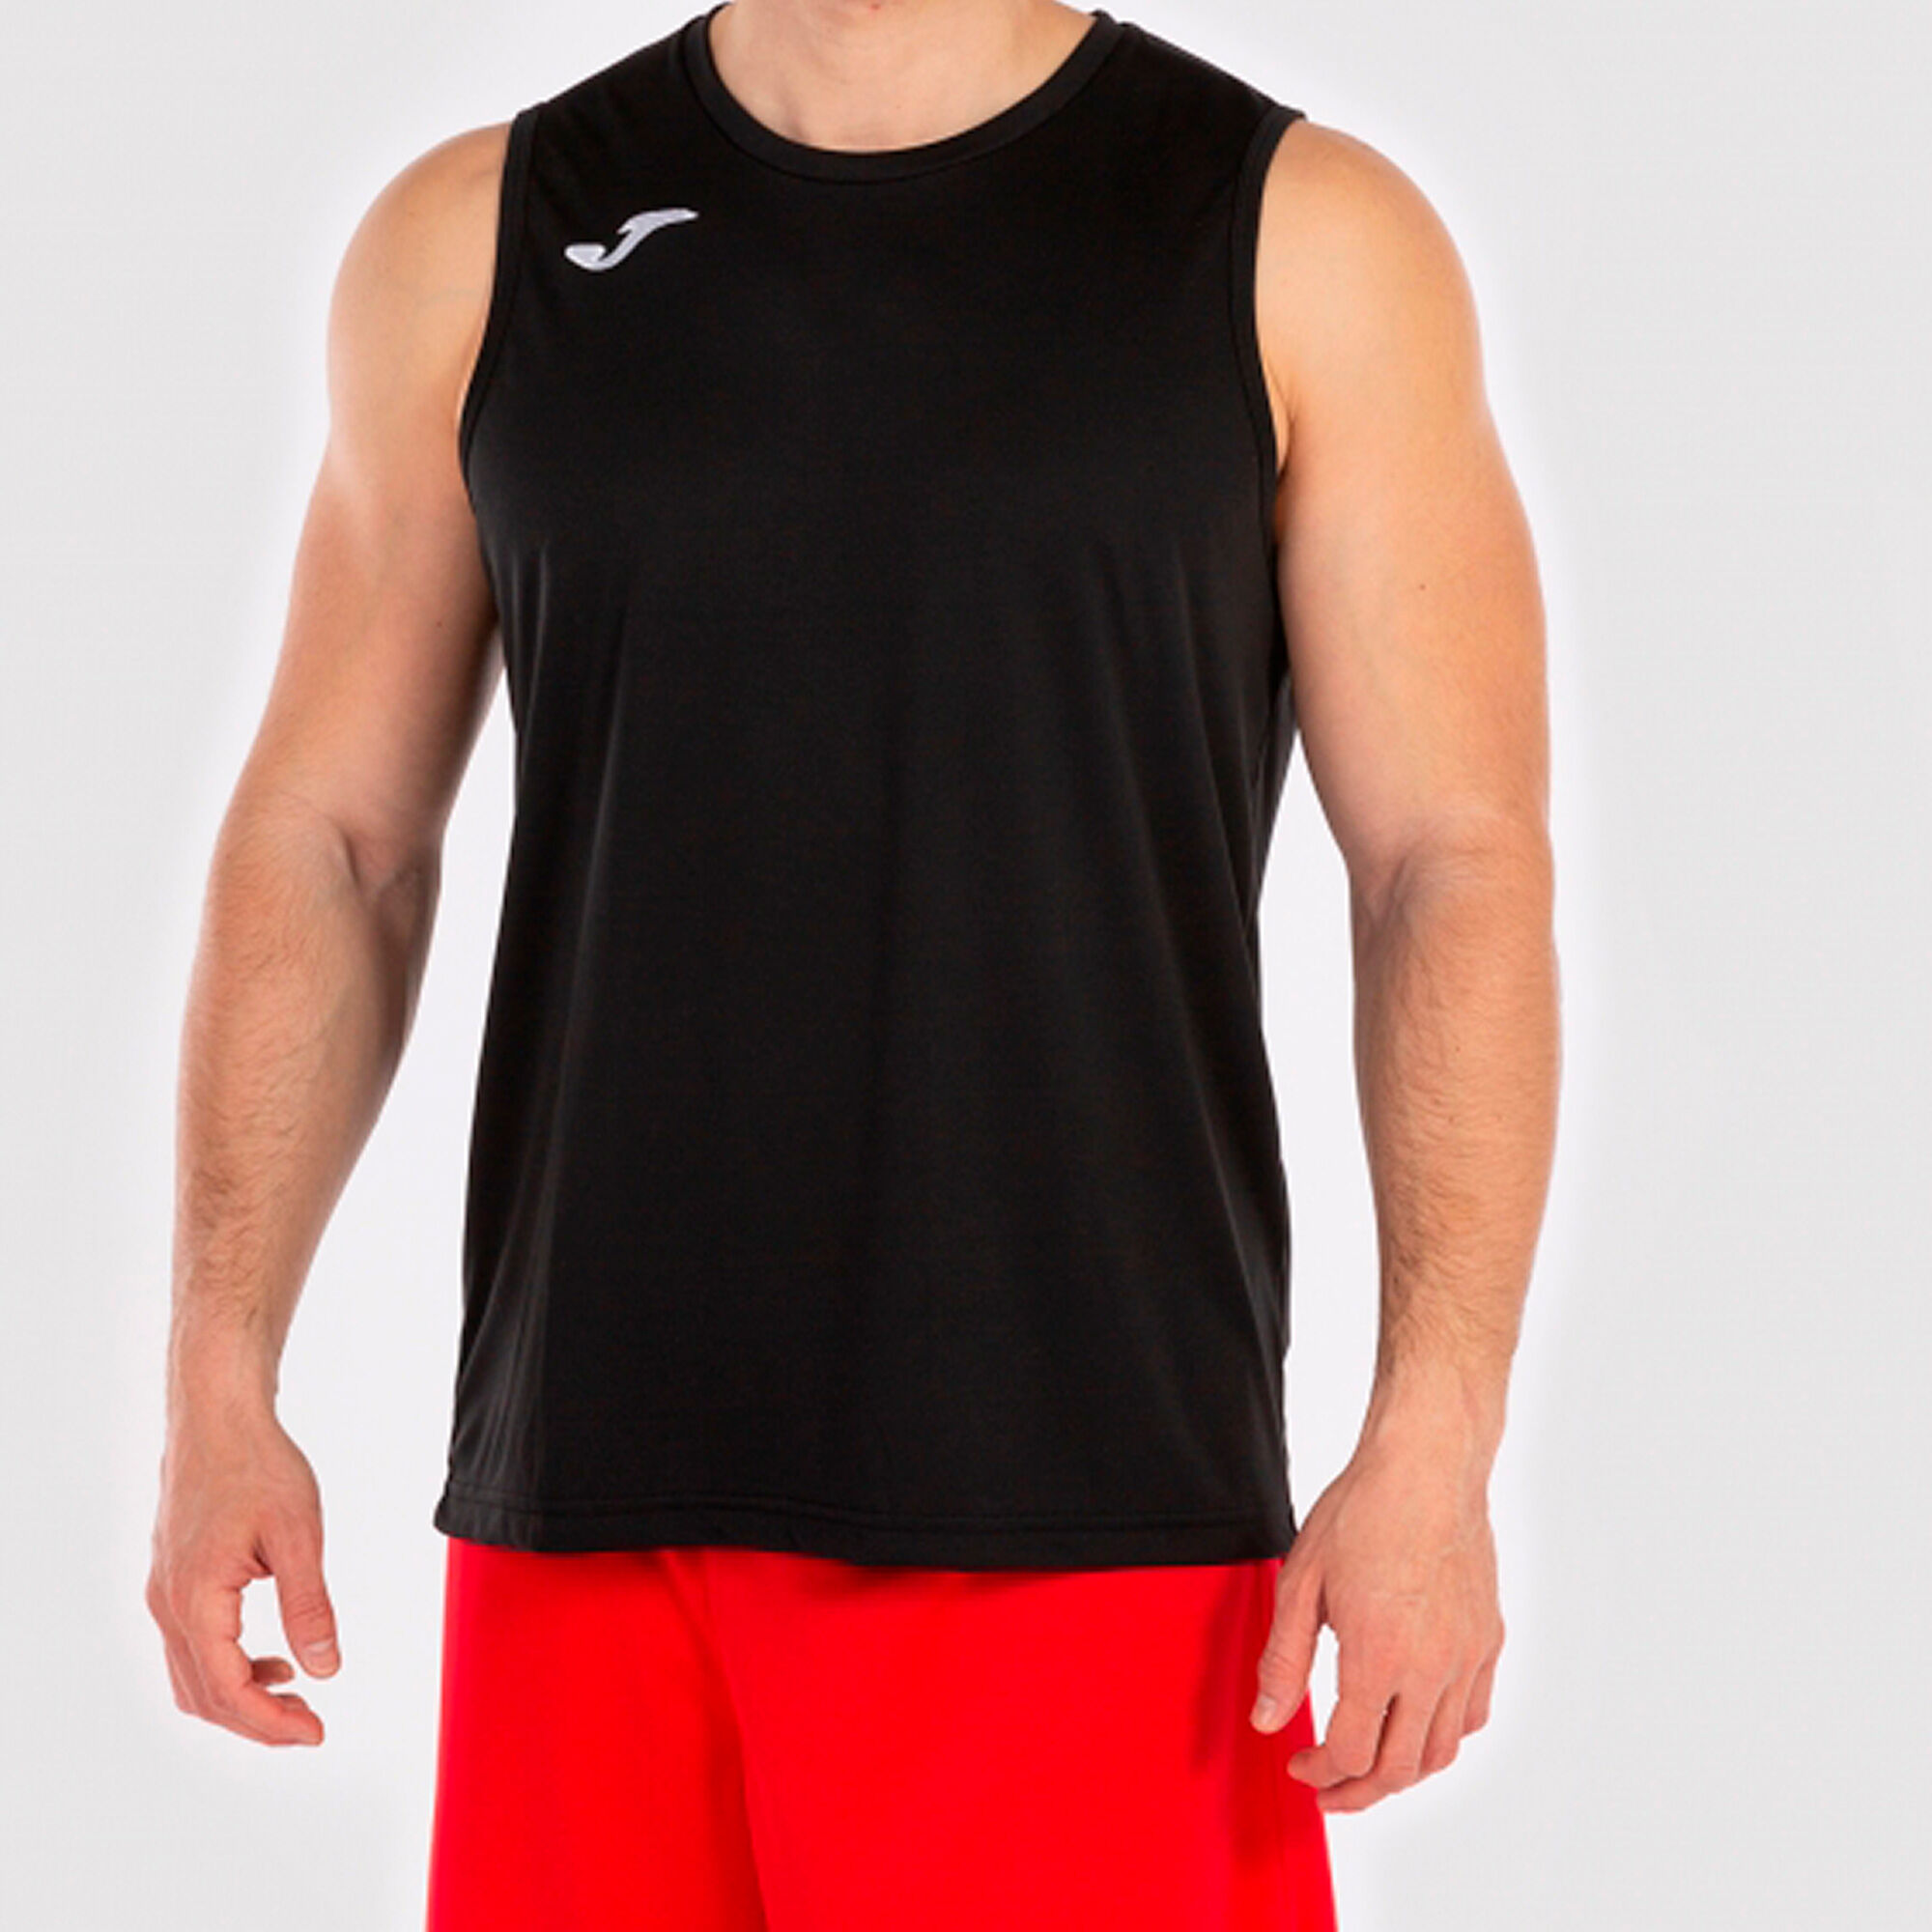 Camiseta sin mangas hombre Combi Basket negro